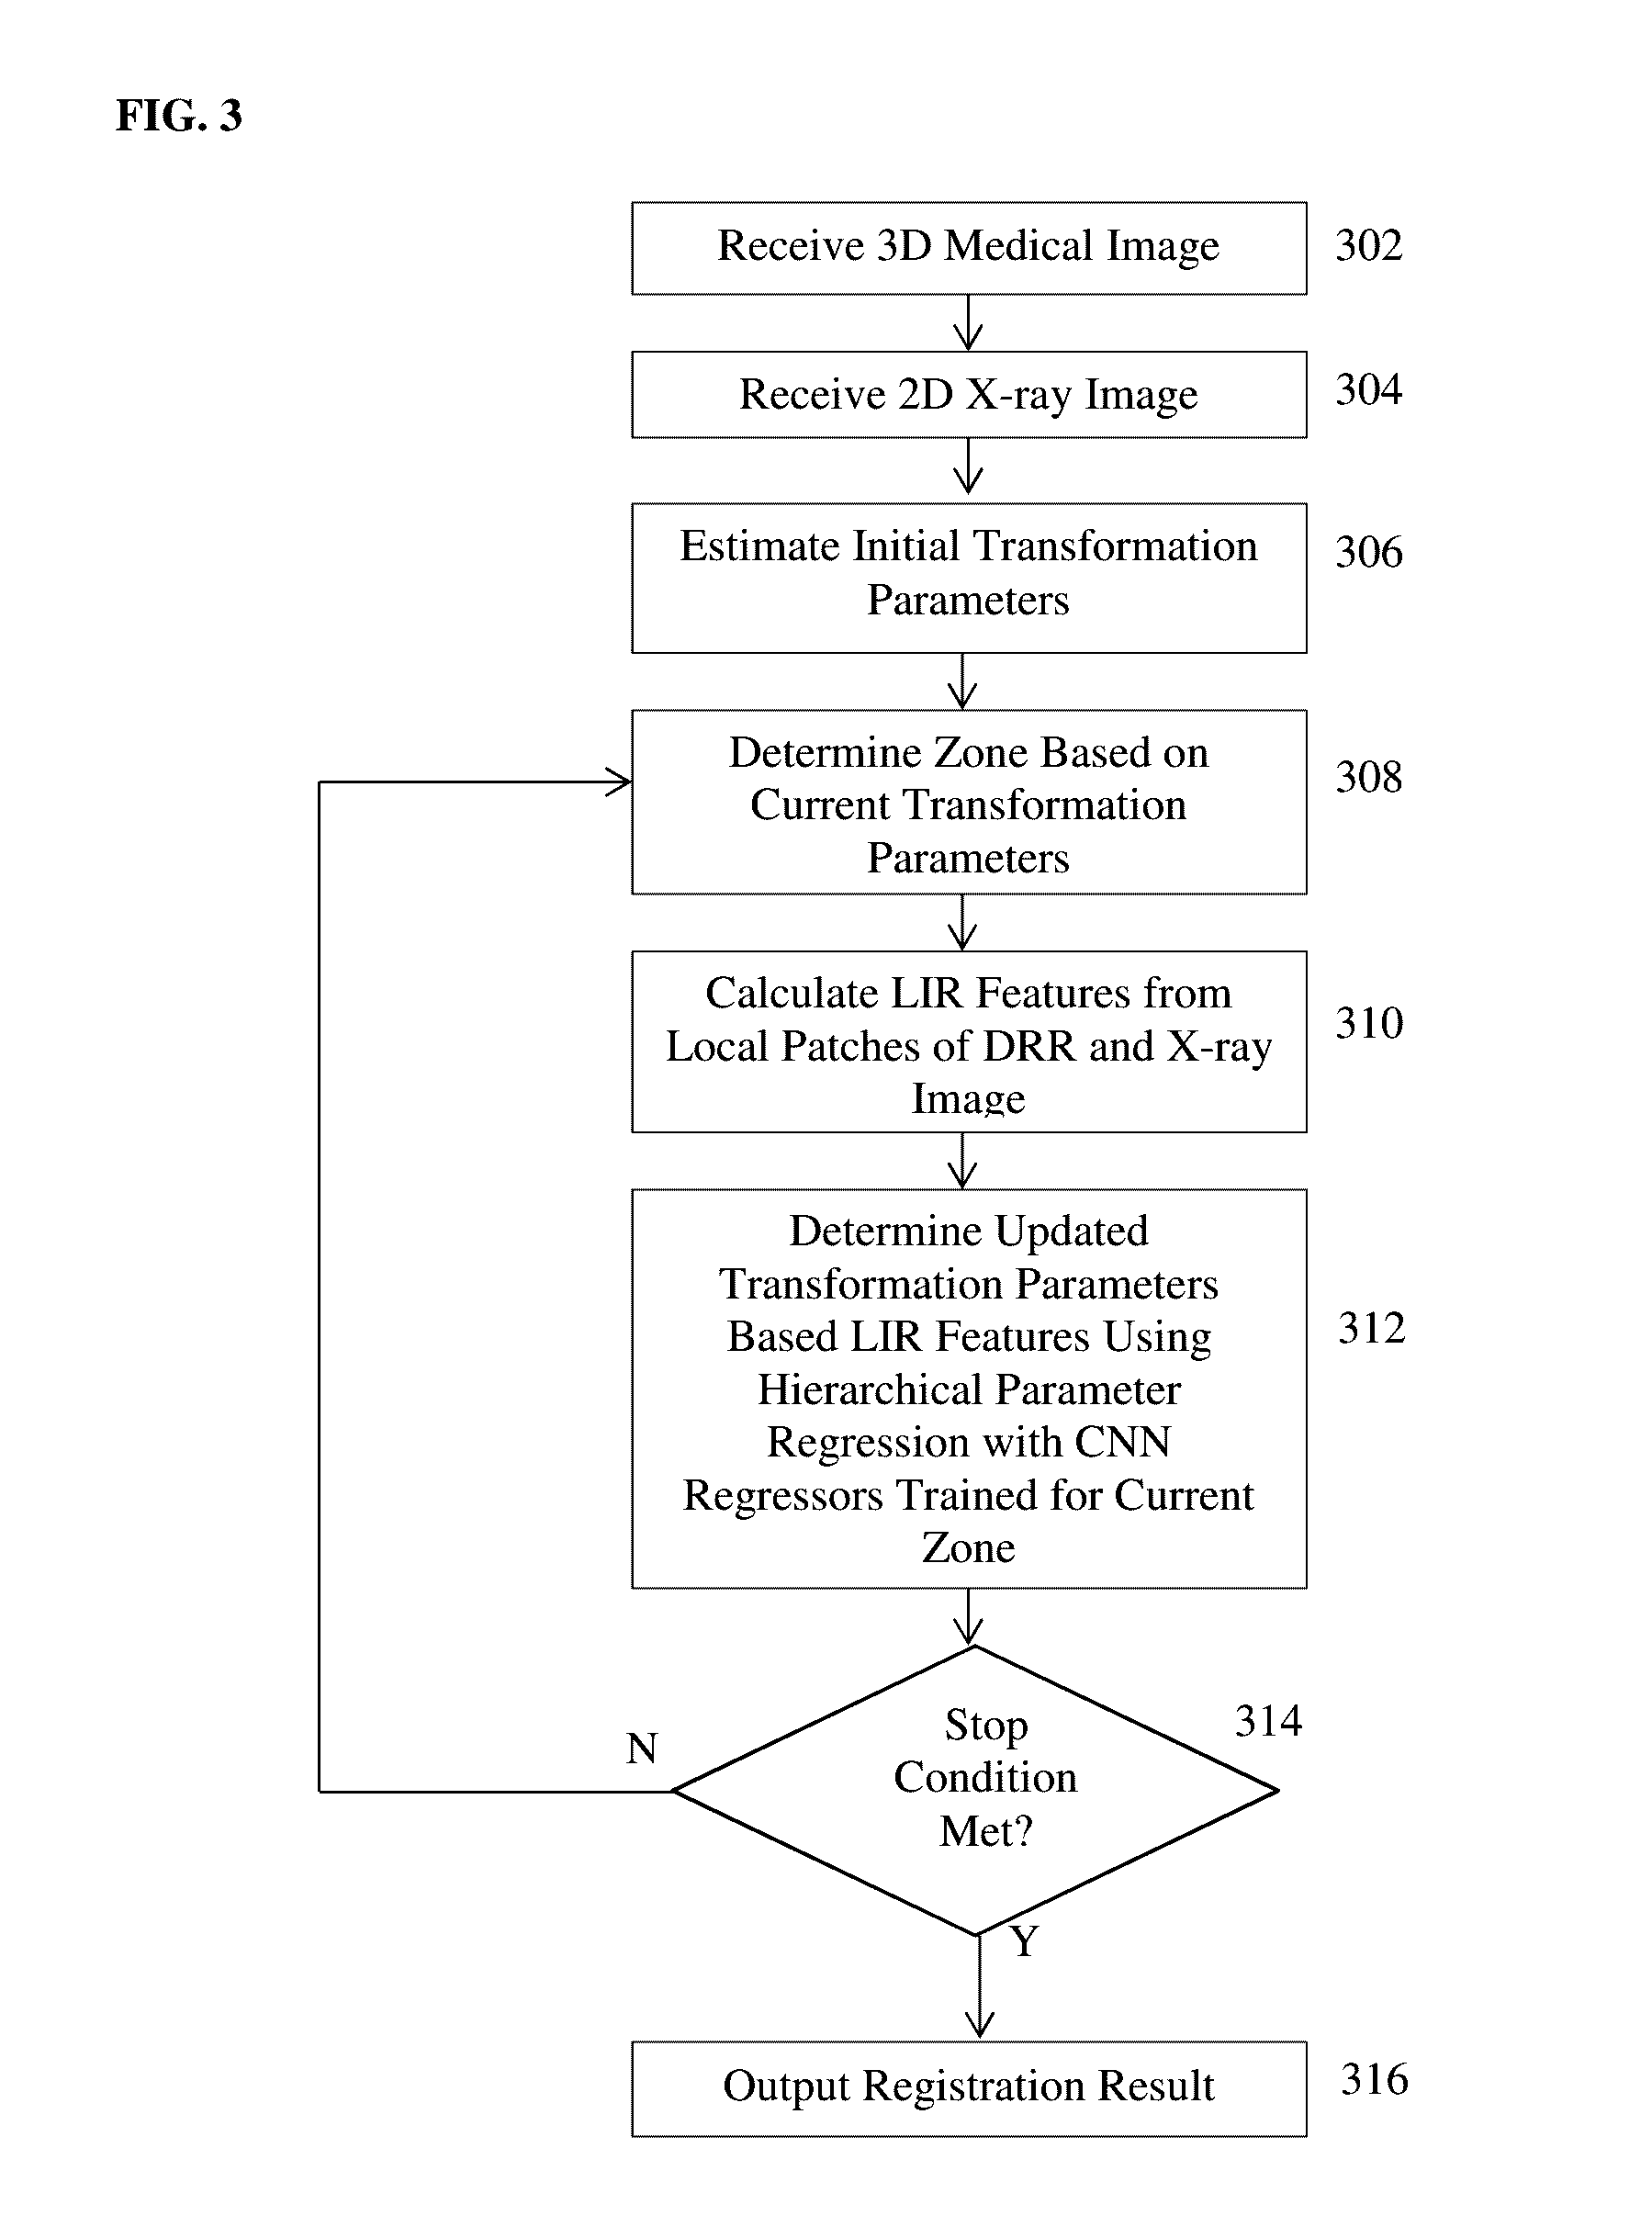 Method for 2-D/3-D registration based on hierarchical pose regression